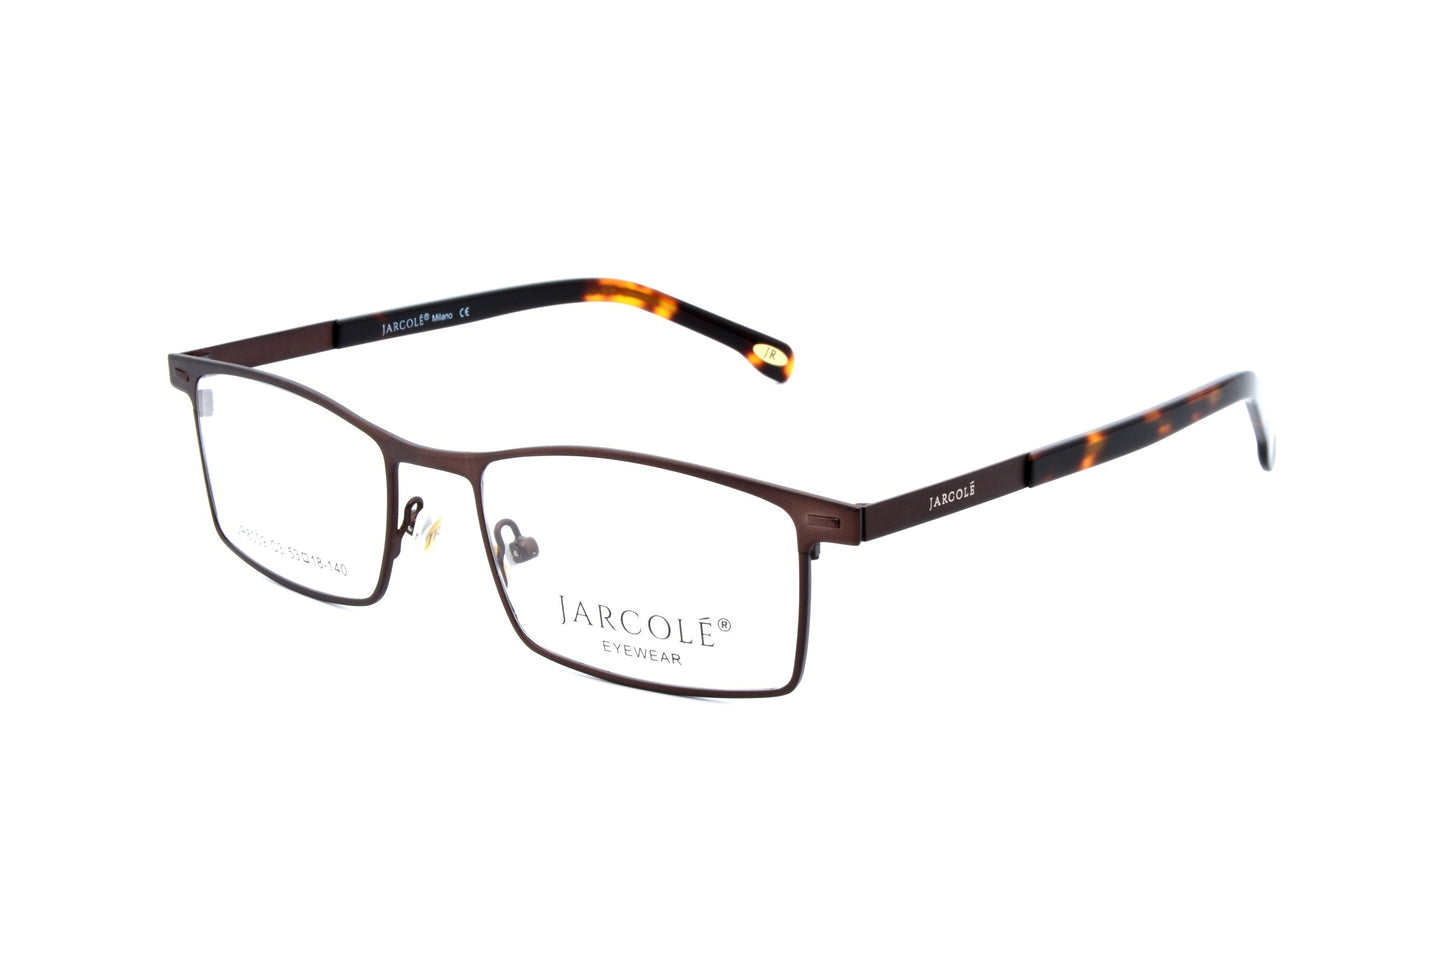 Jarcole eyewear 8009, C3 - Optics Trading